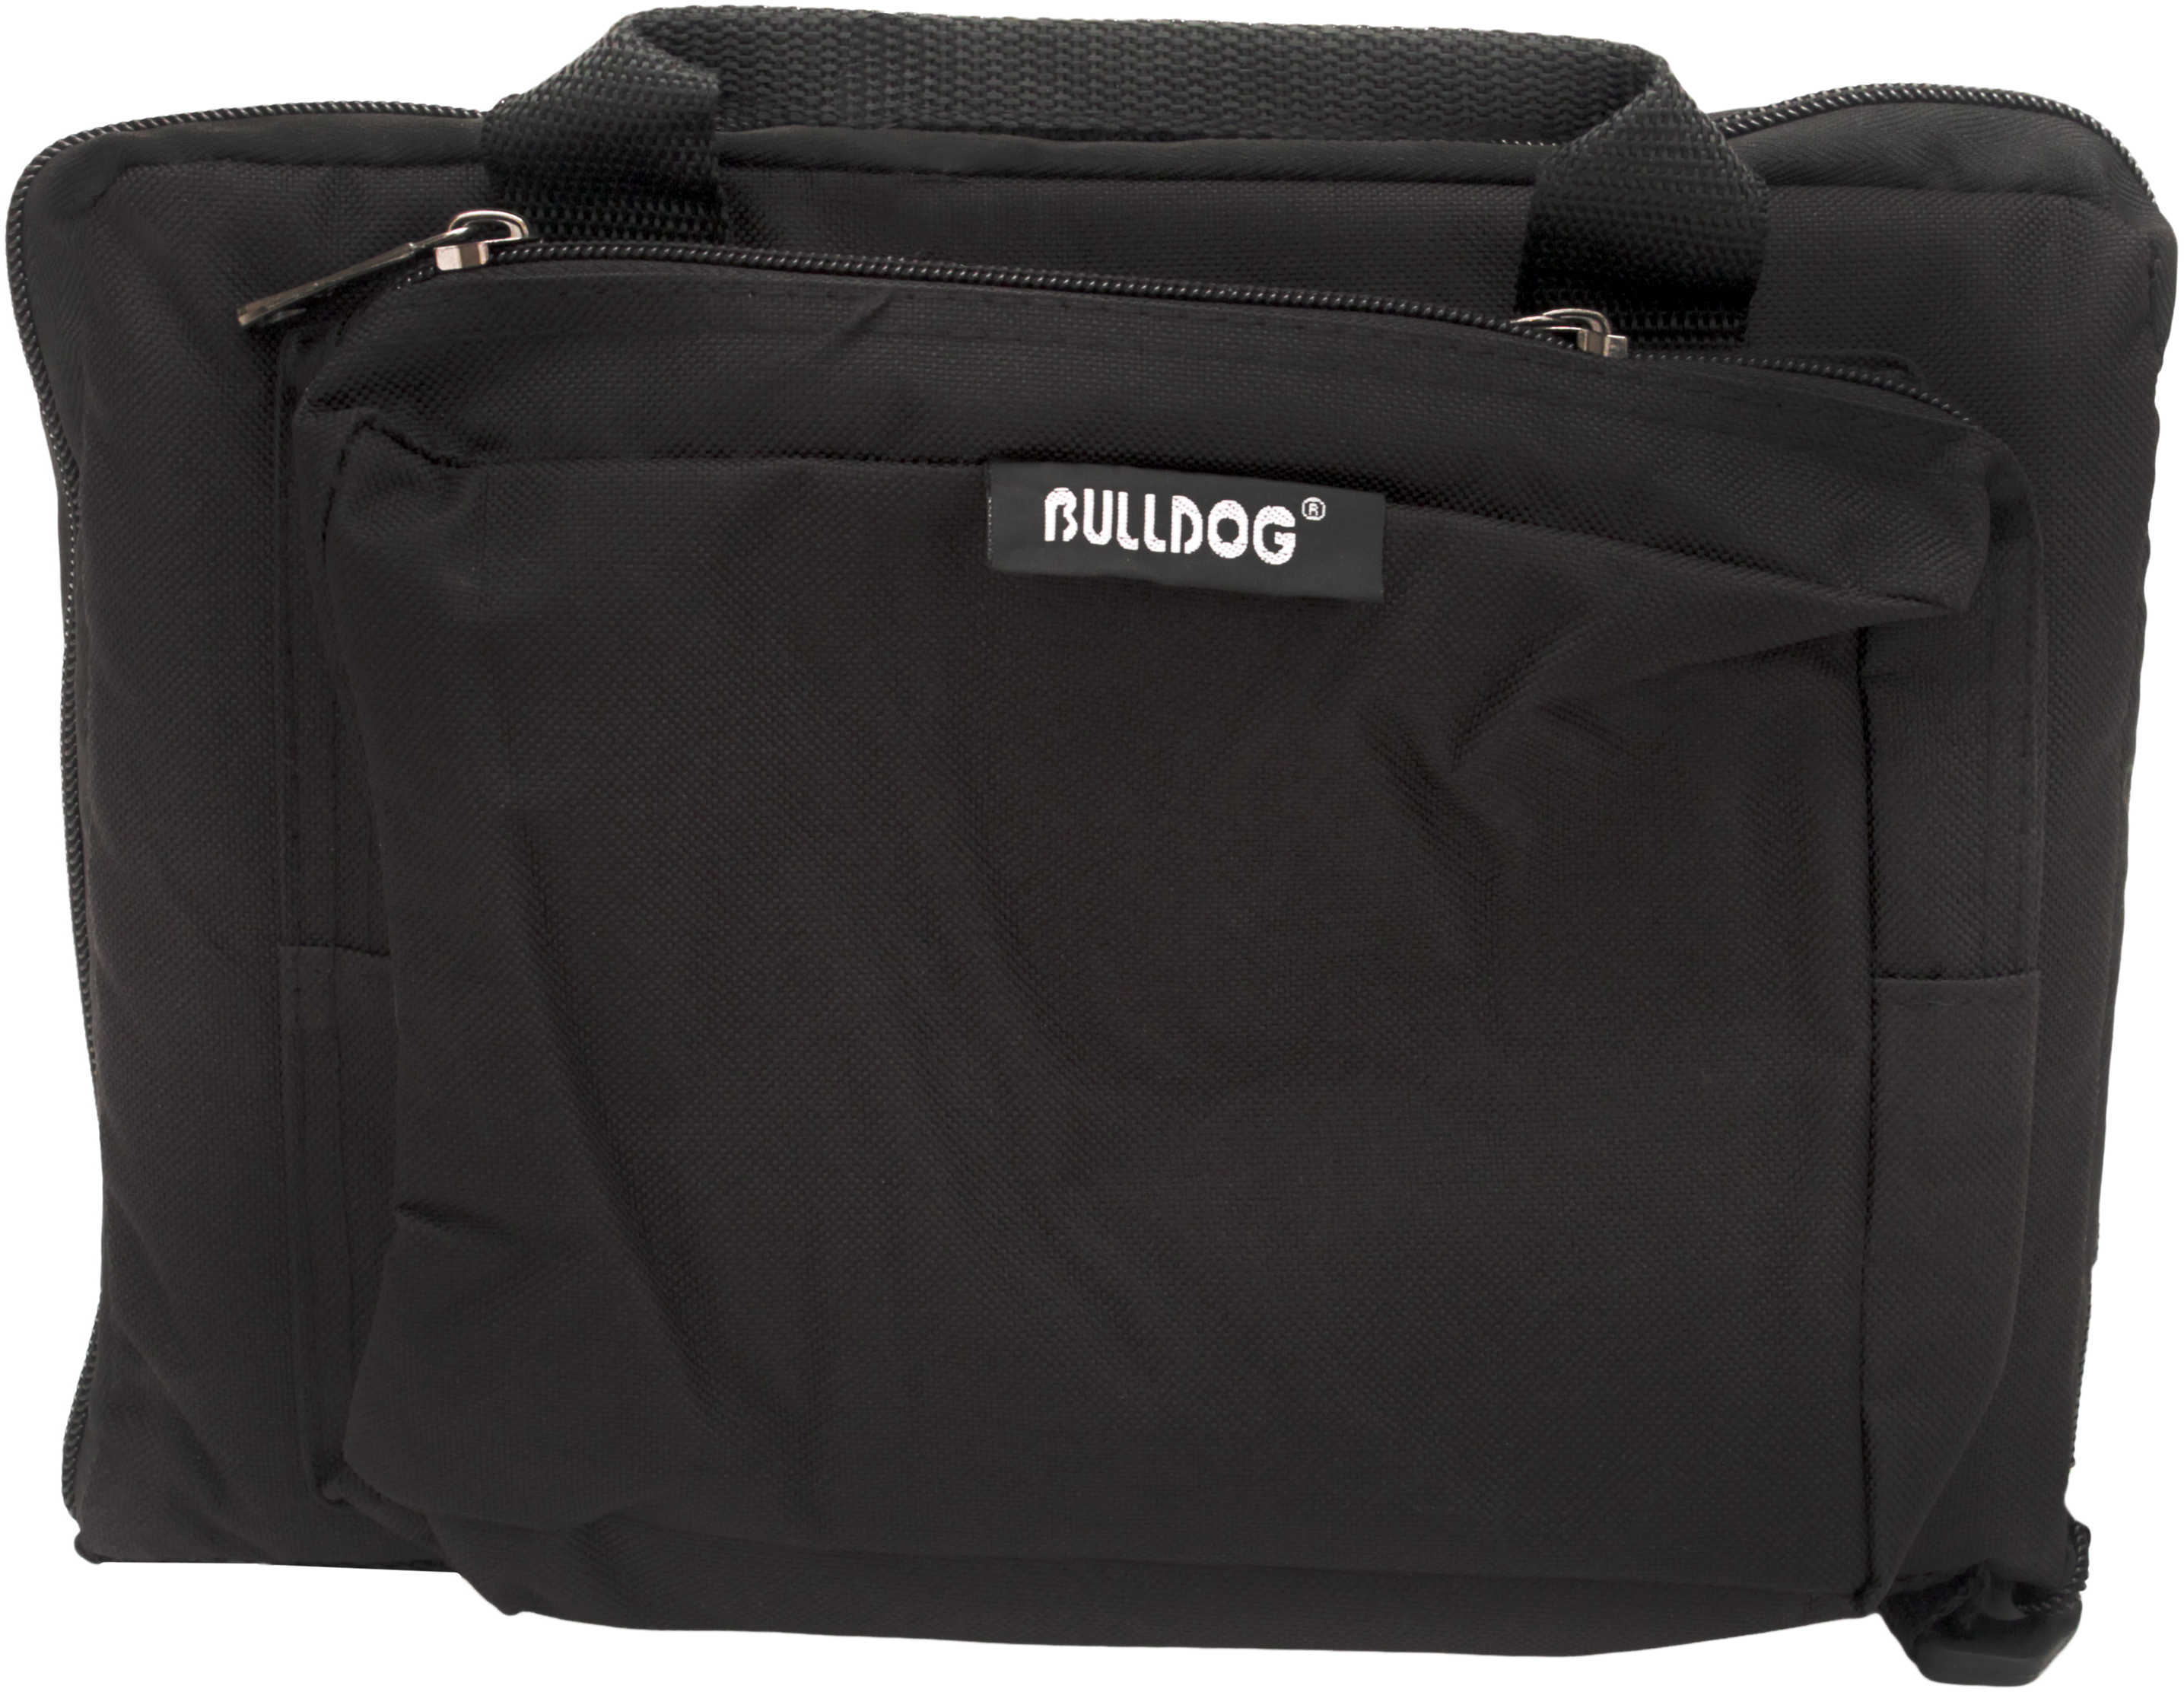 Bulldog Cases Mini Range Bag Black Soft BD915